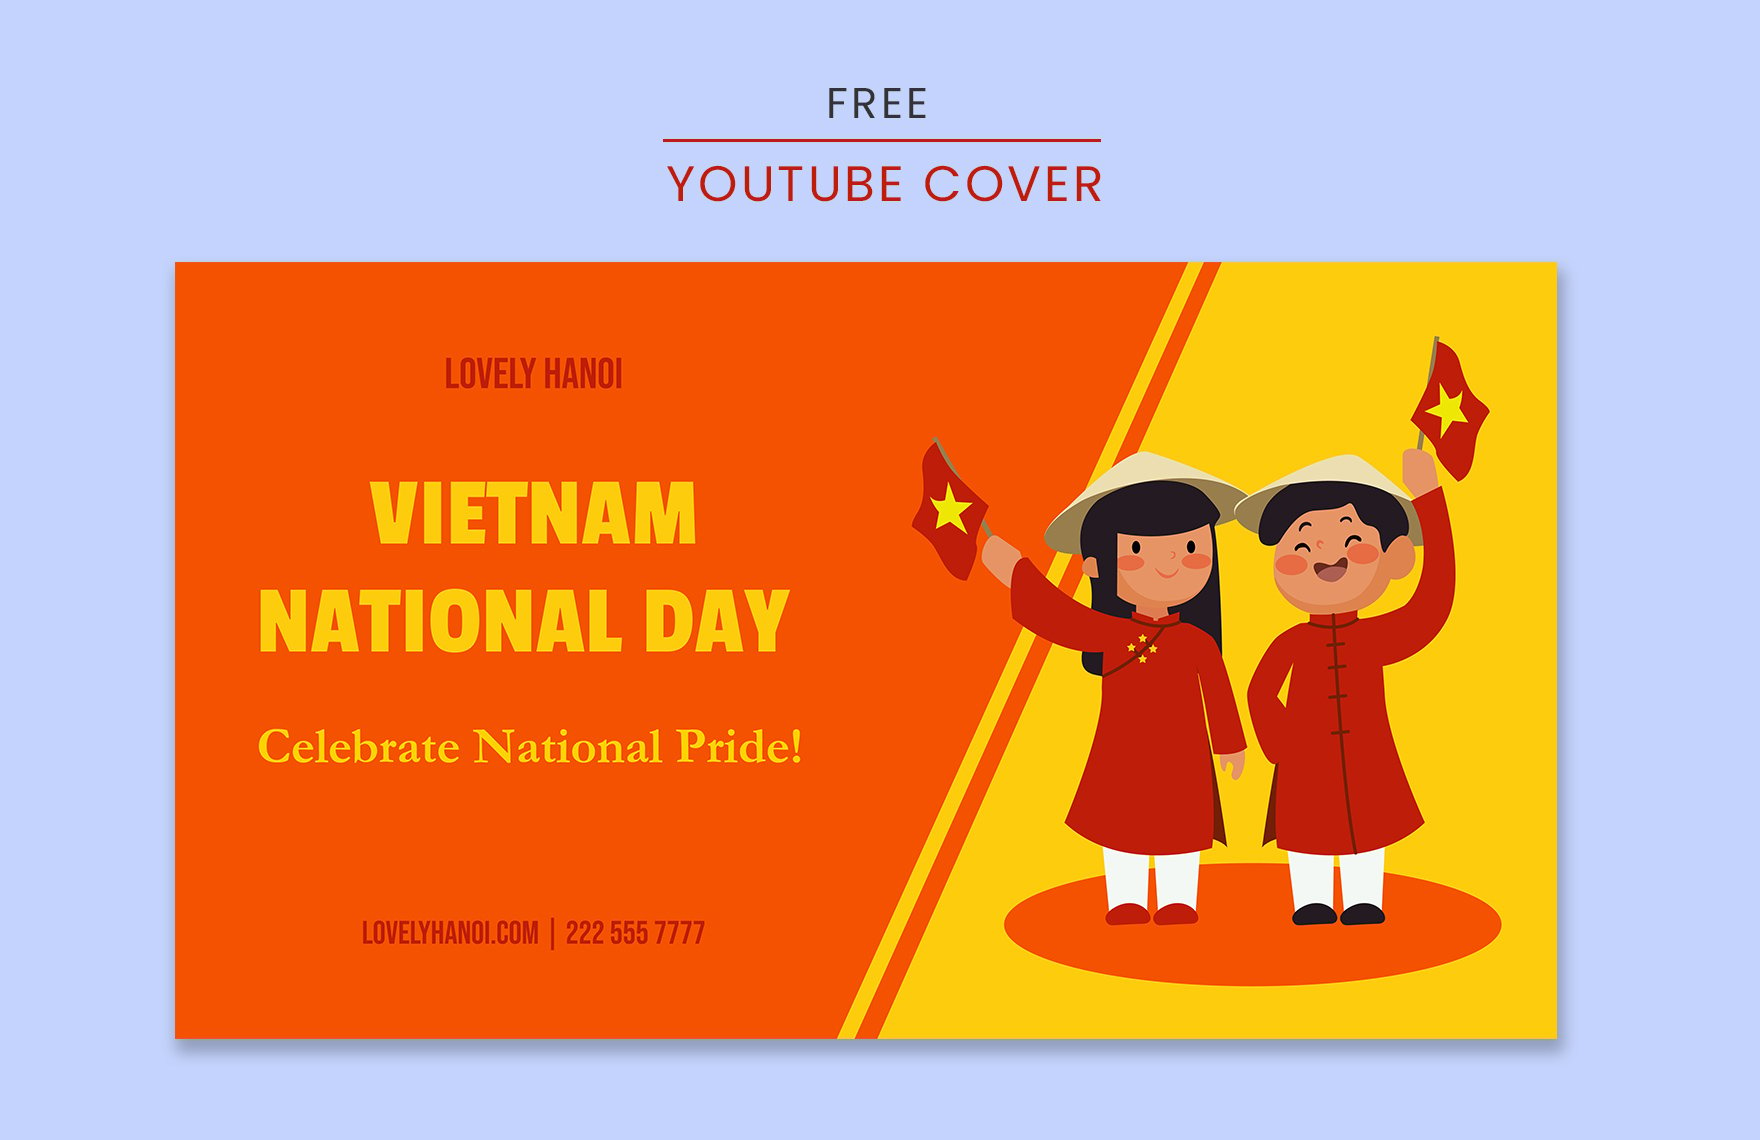 Free Vietnam National Day Youtube Thumbnail Cover in PDF, Illustrator, SVG, JPEG